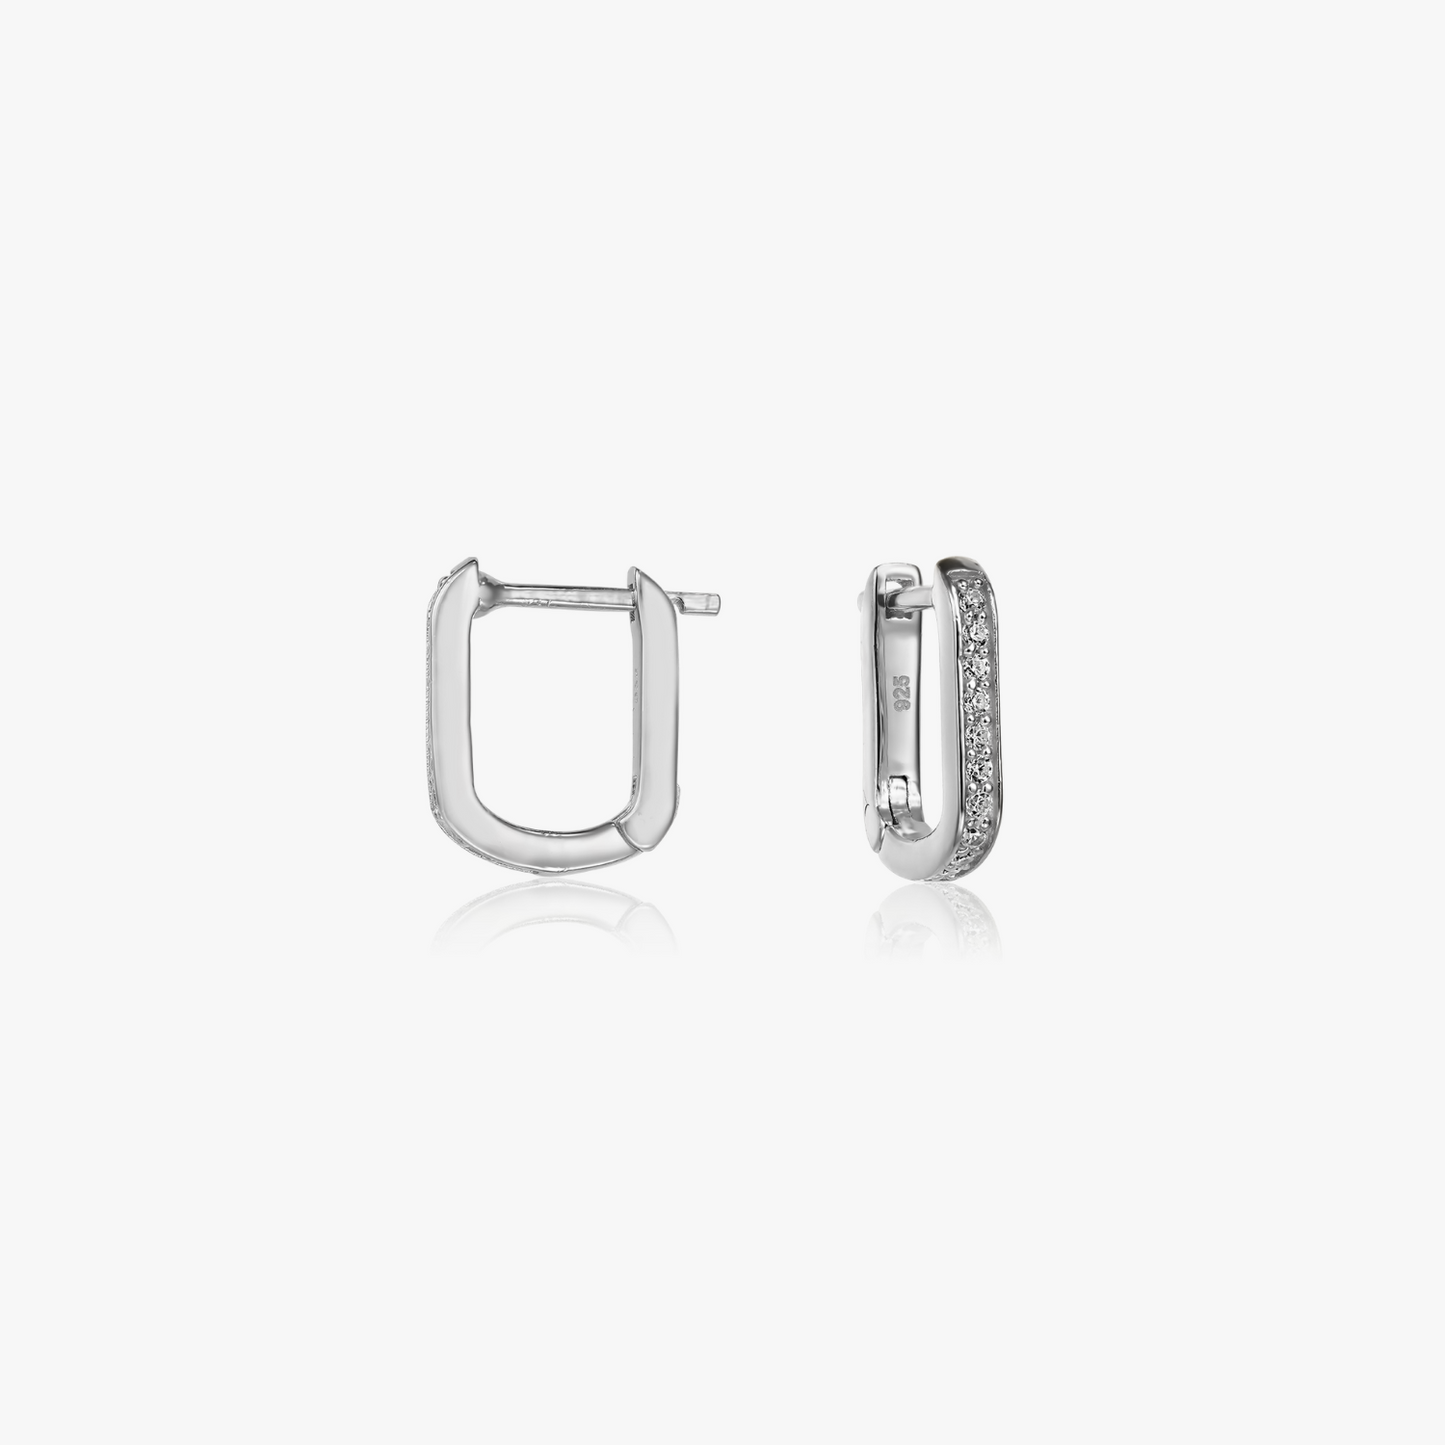 U Hoops silver earrings - Zirconium